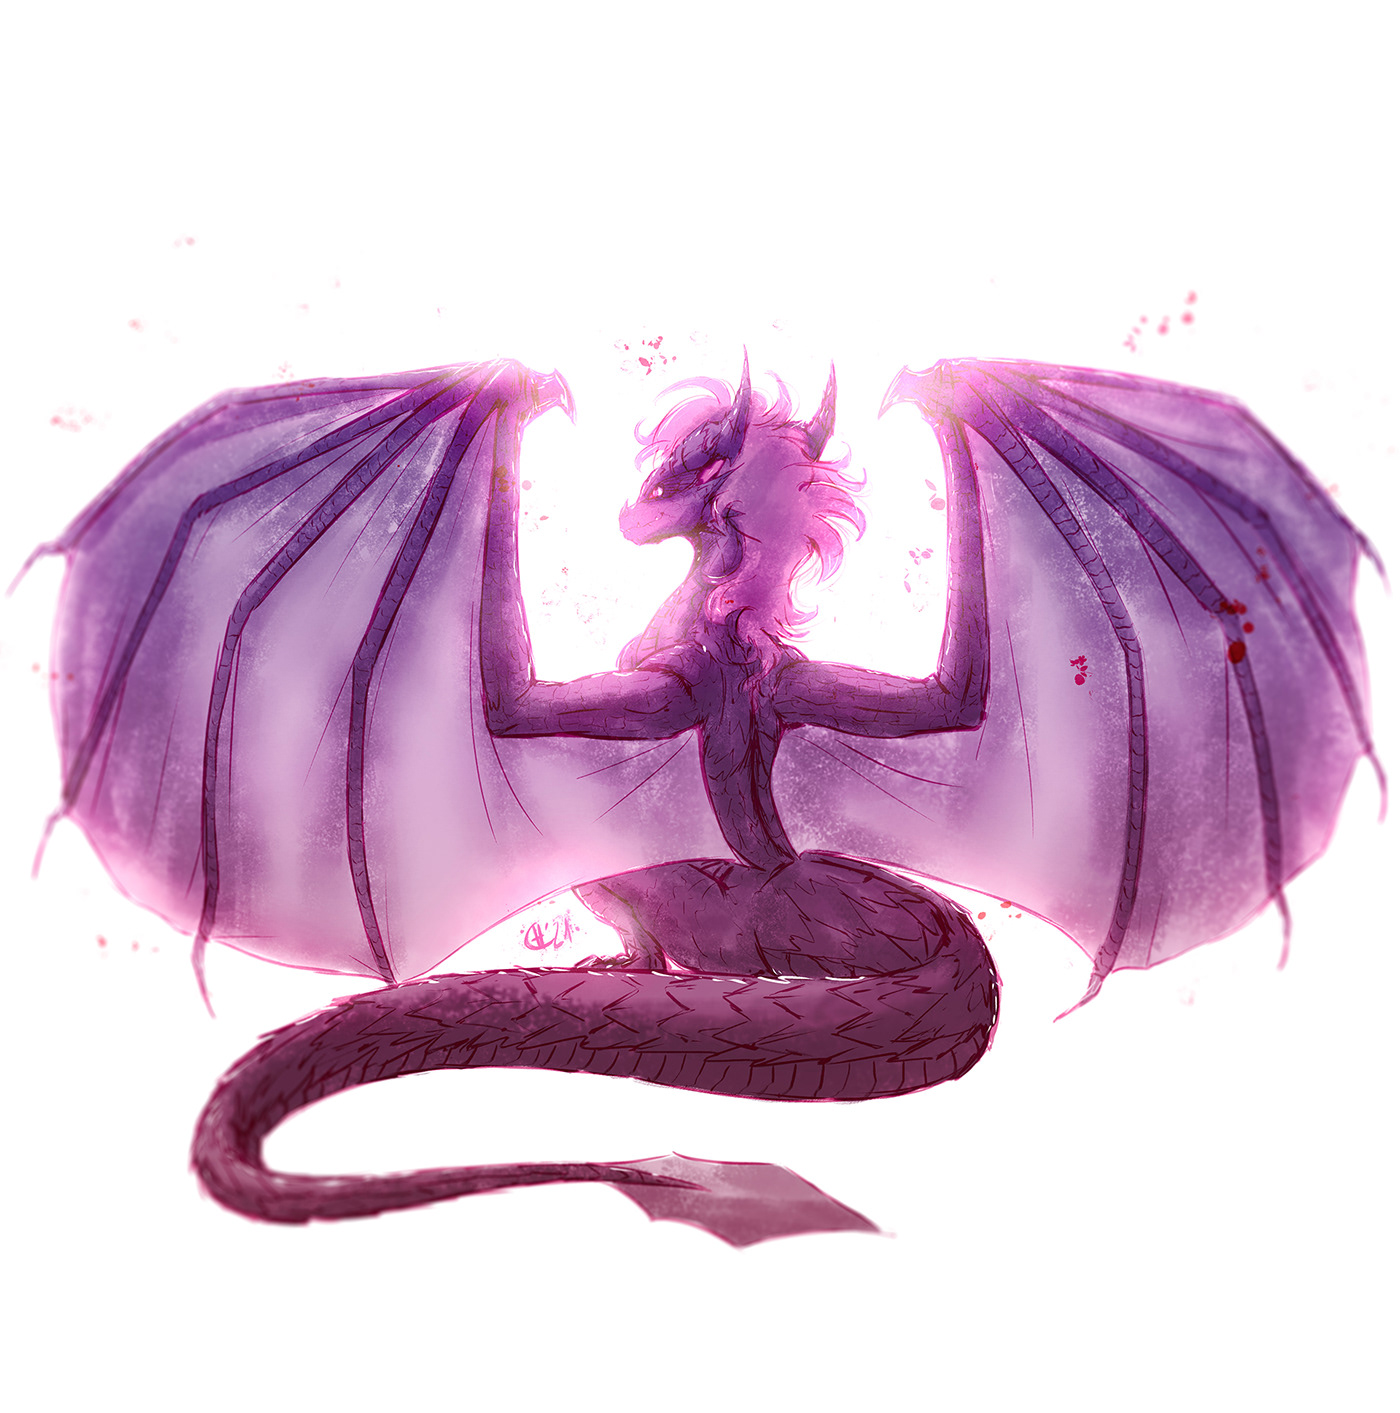 al characterdesign characters ComicArt creaturedesign dragon dragons dragonsgirls girls MonsterDesign